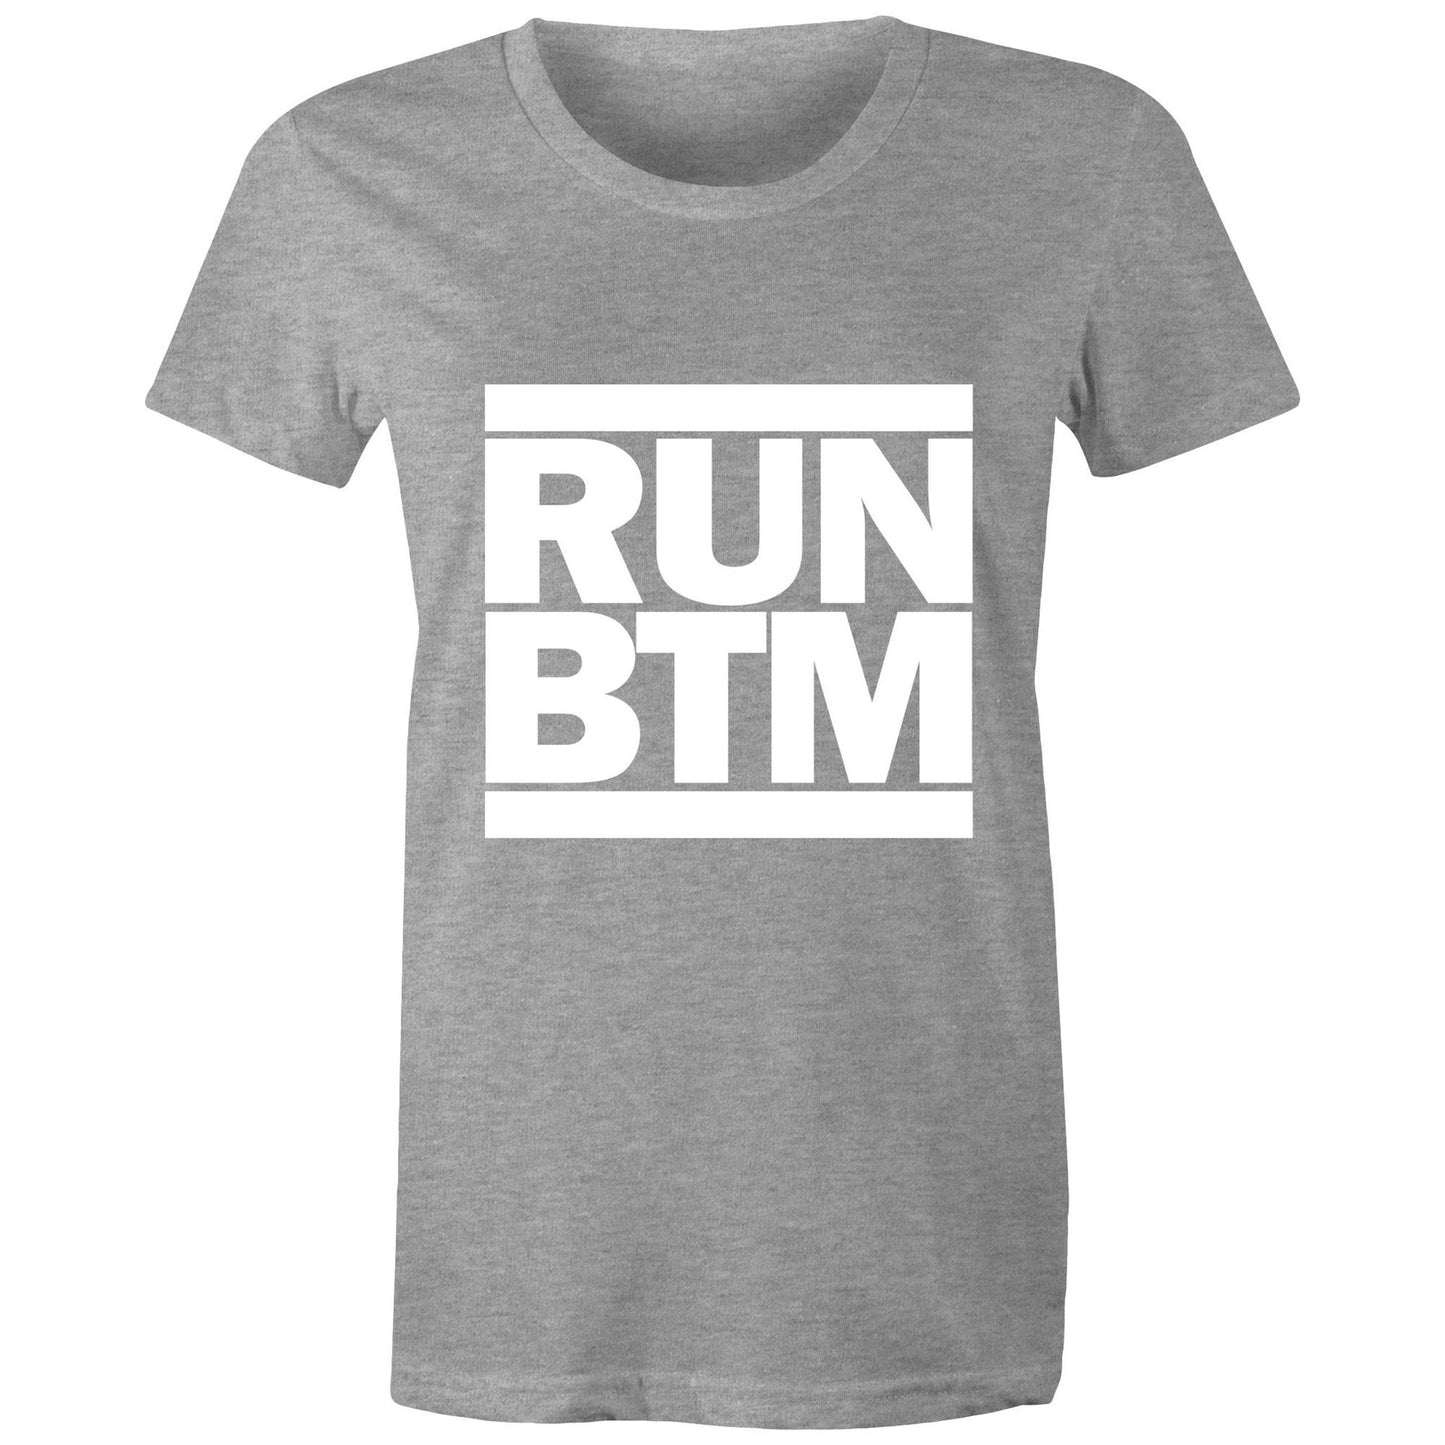 RUN BTM (All white) - Sportage Surf - Womens T-shirt